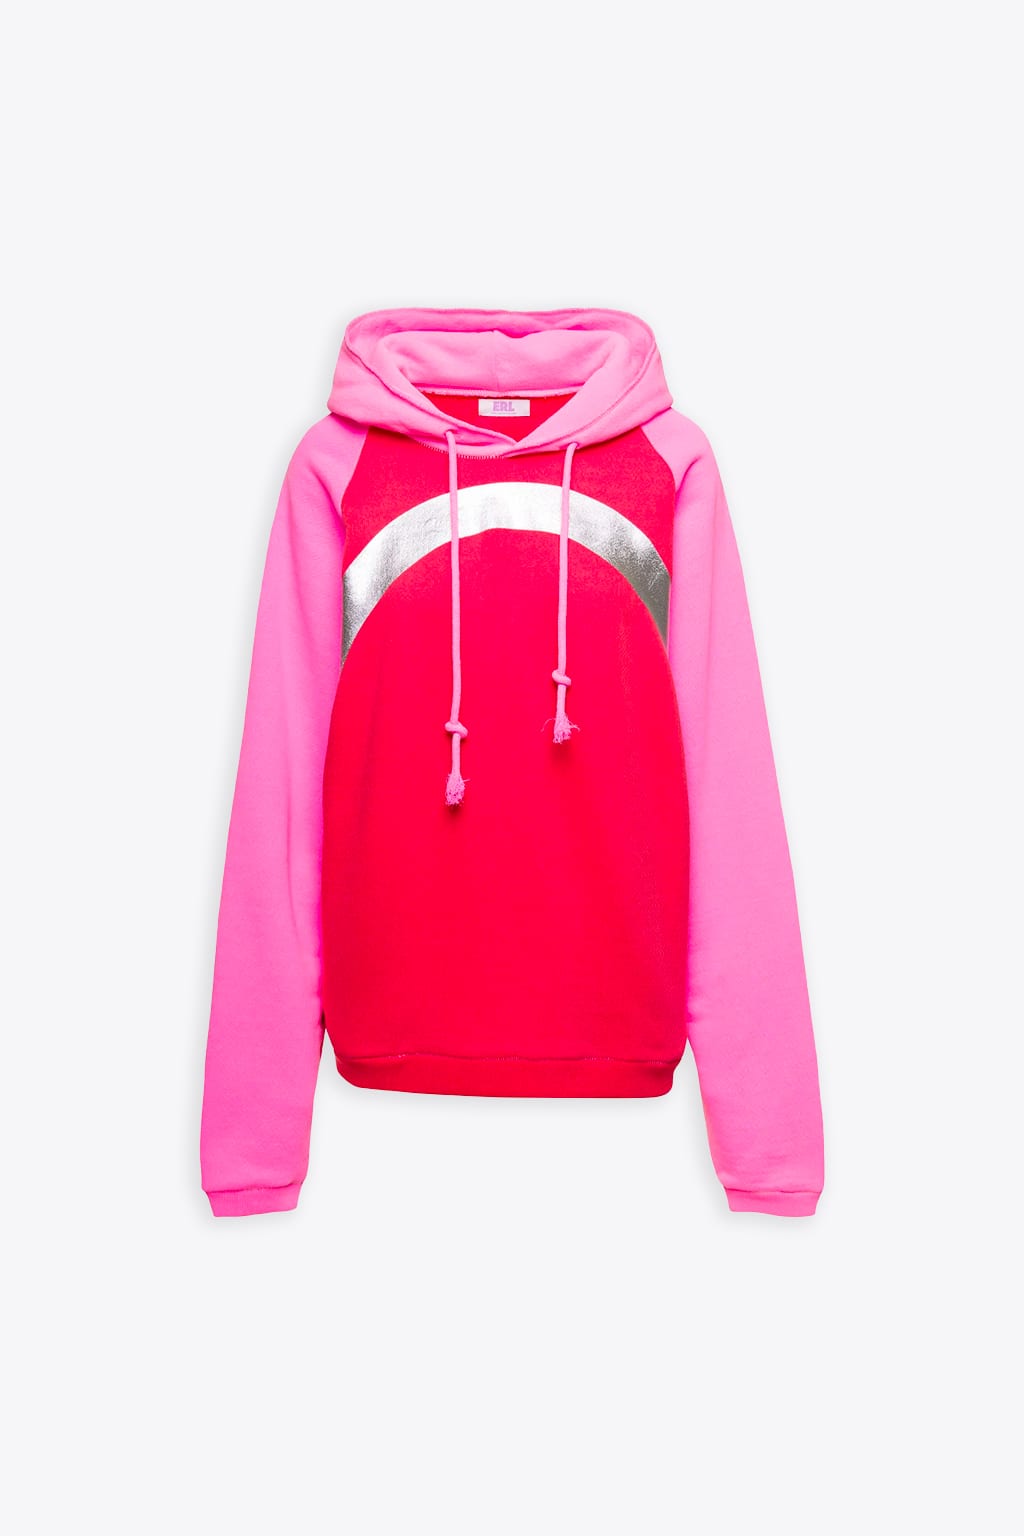 Unisex Raimbow Hoodie Knit Fuchsia and pink cotton hoodie - Unisex rainbow hoodie knit